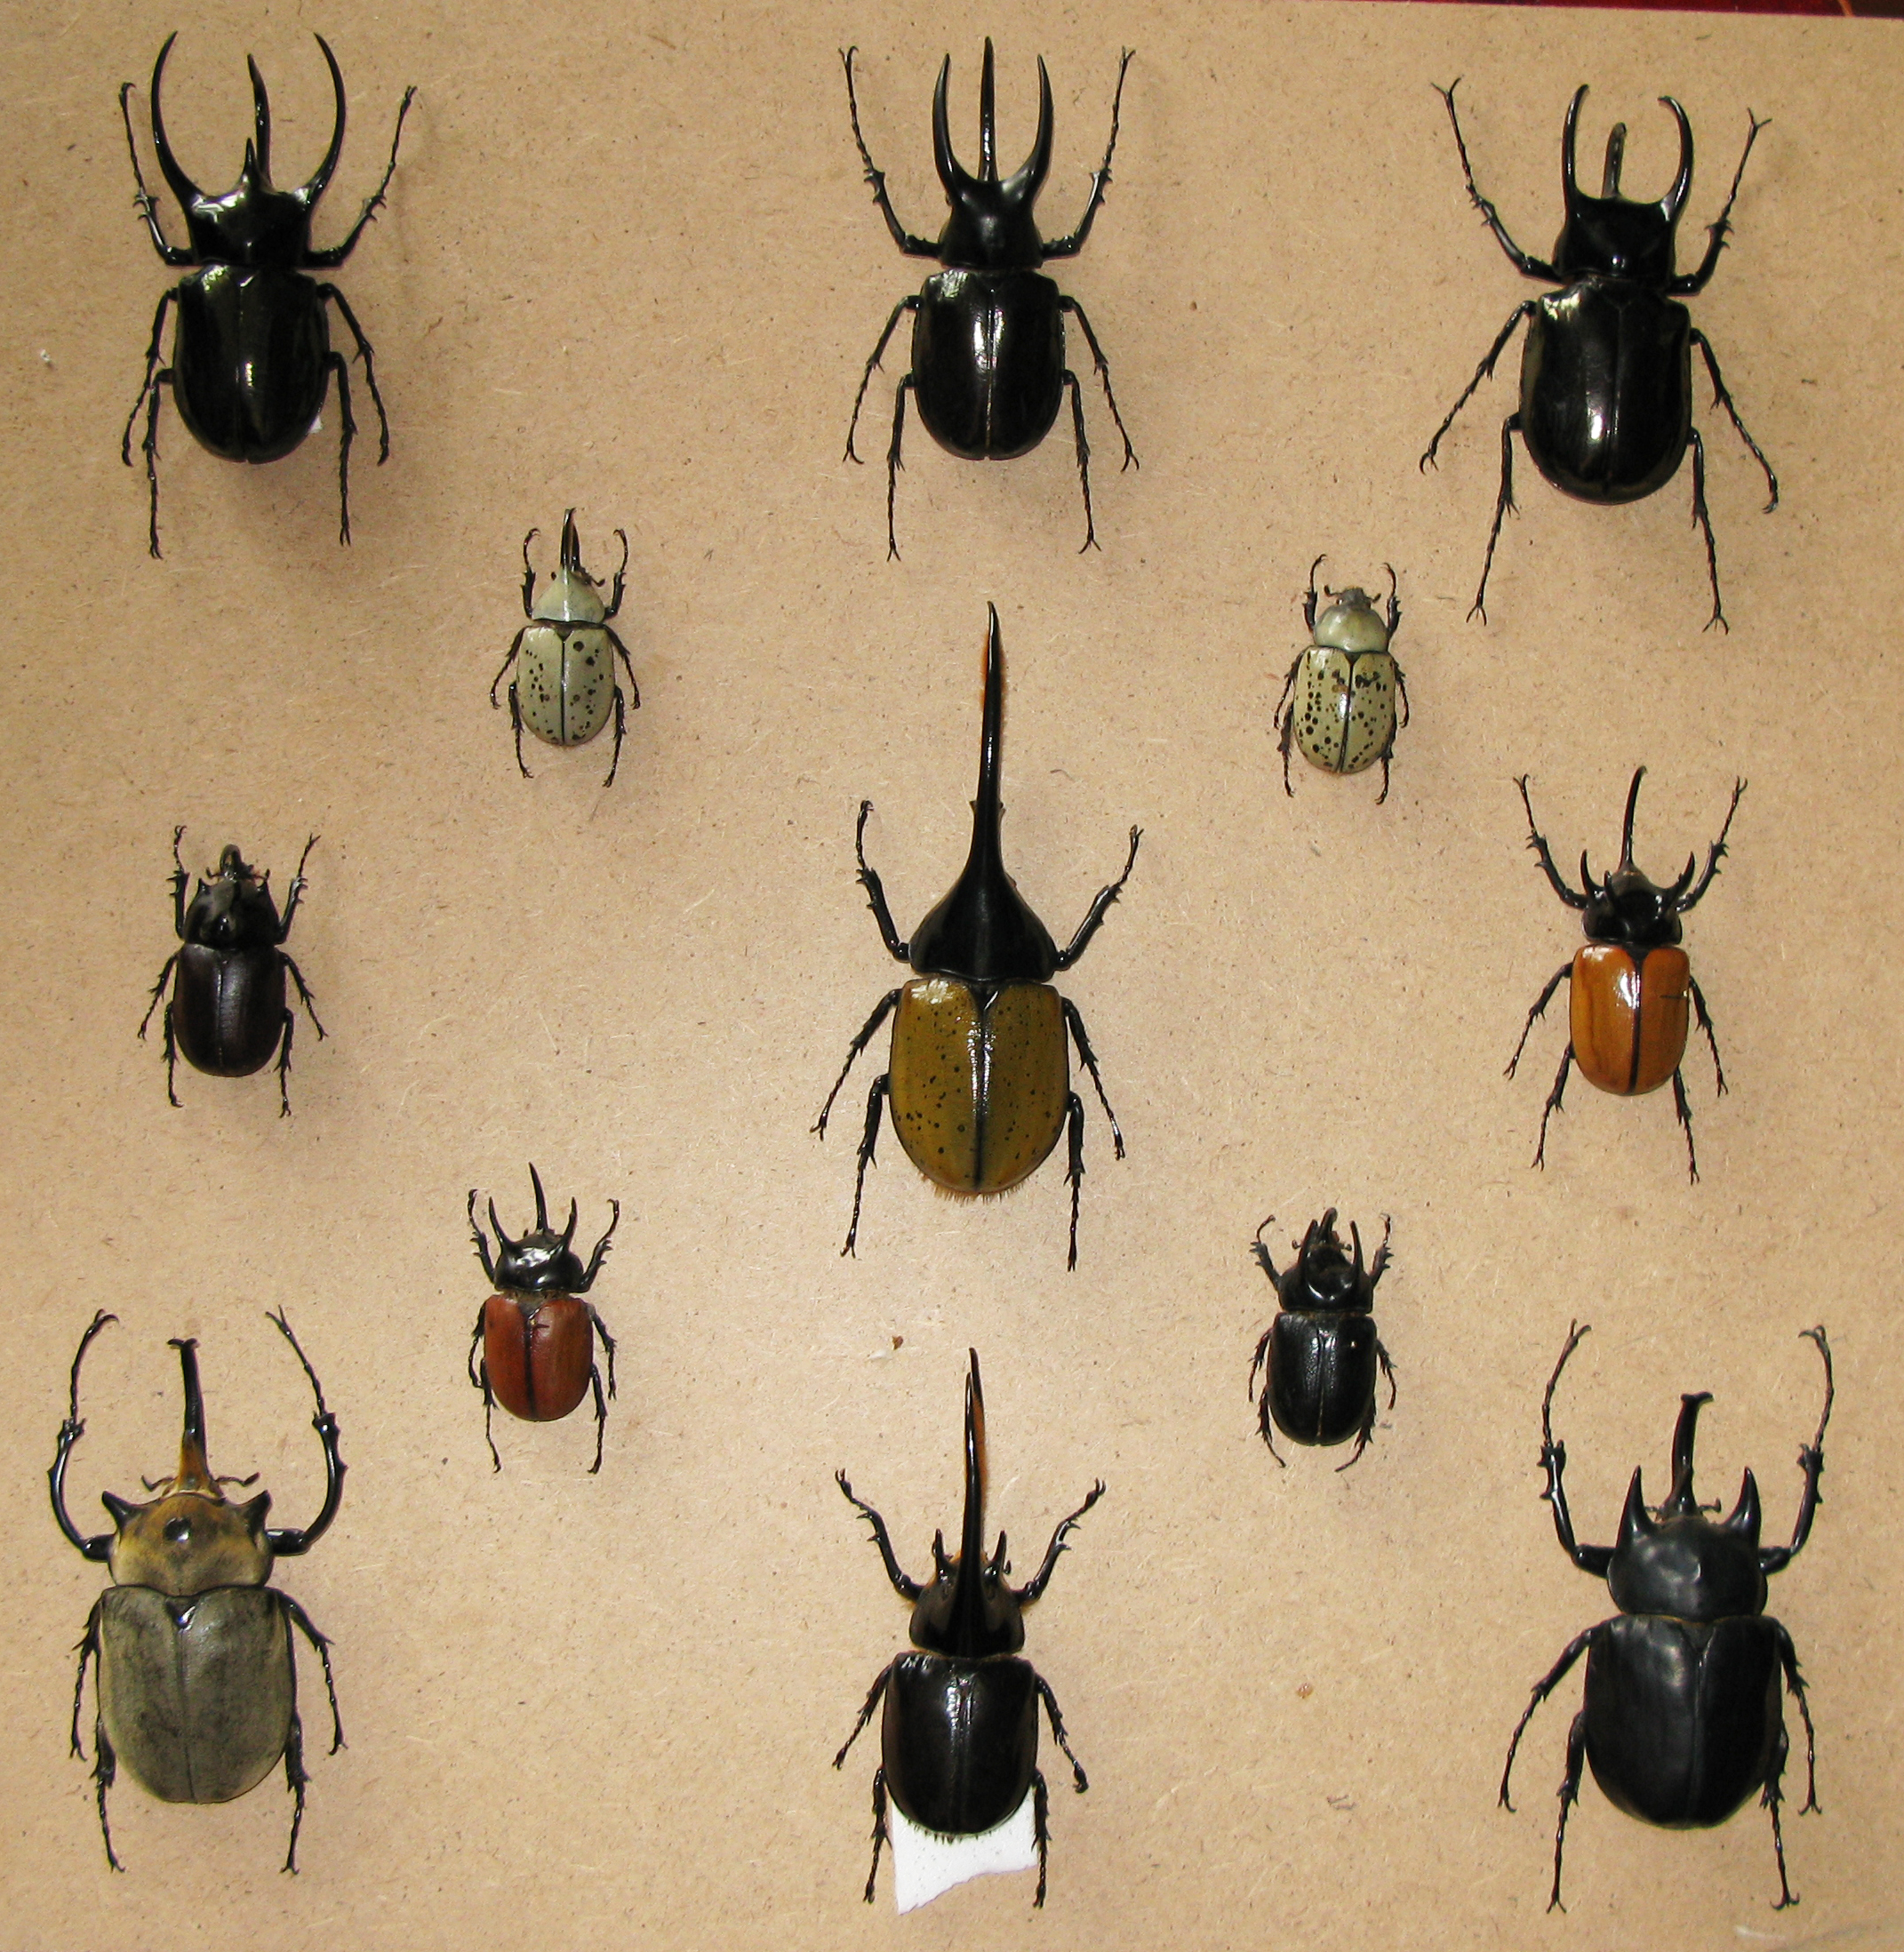 Kumbang Scarab Pemakan Daging, Apakah Mitos atau Kenyataan?